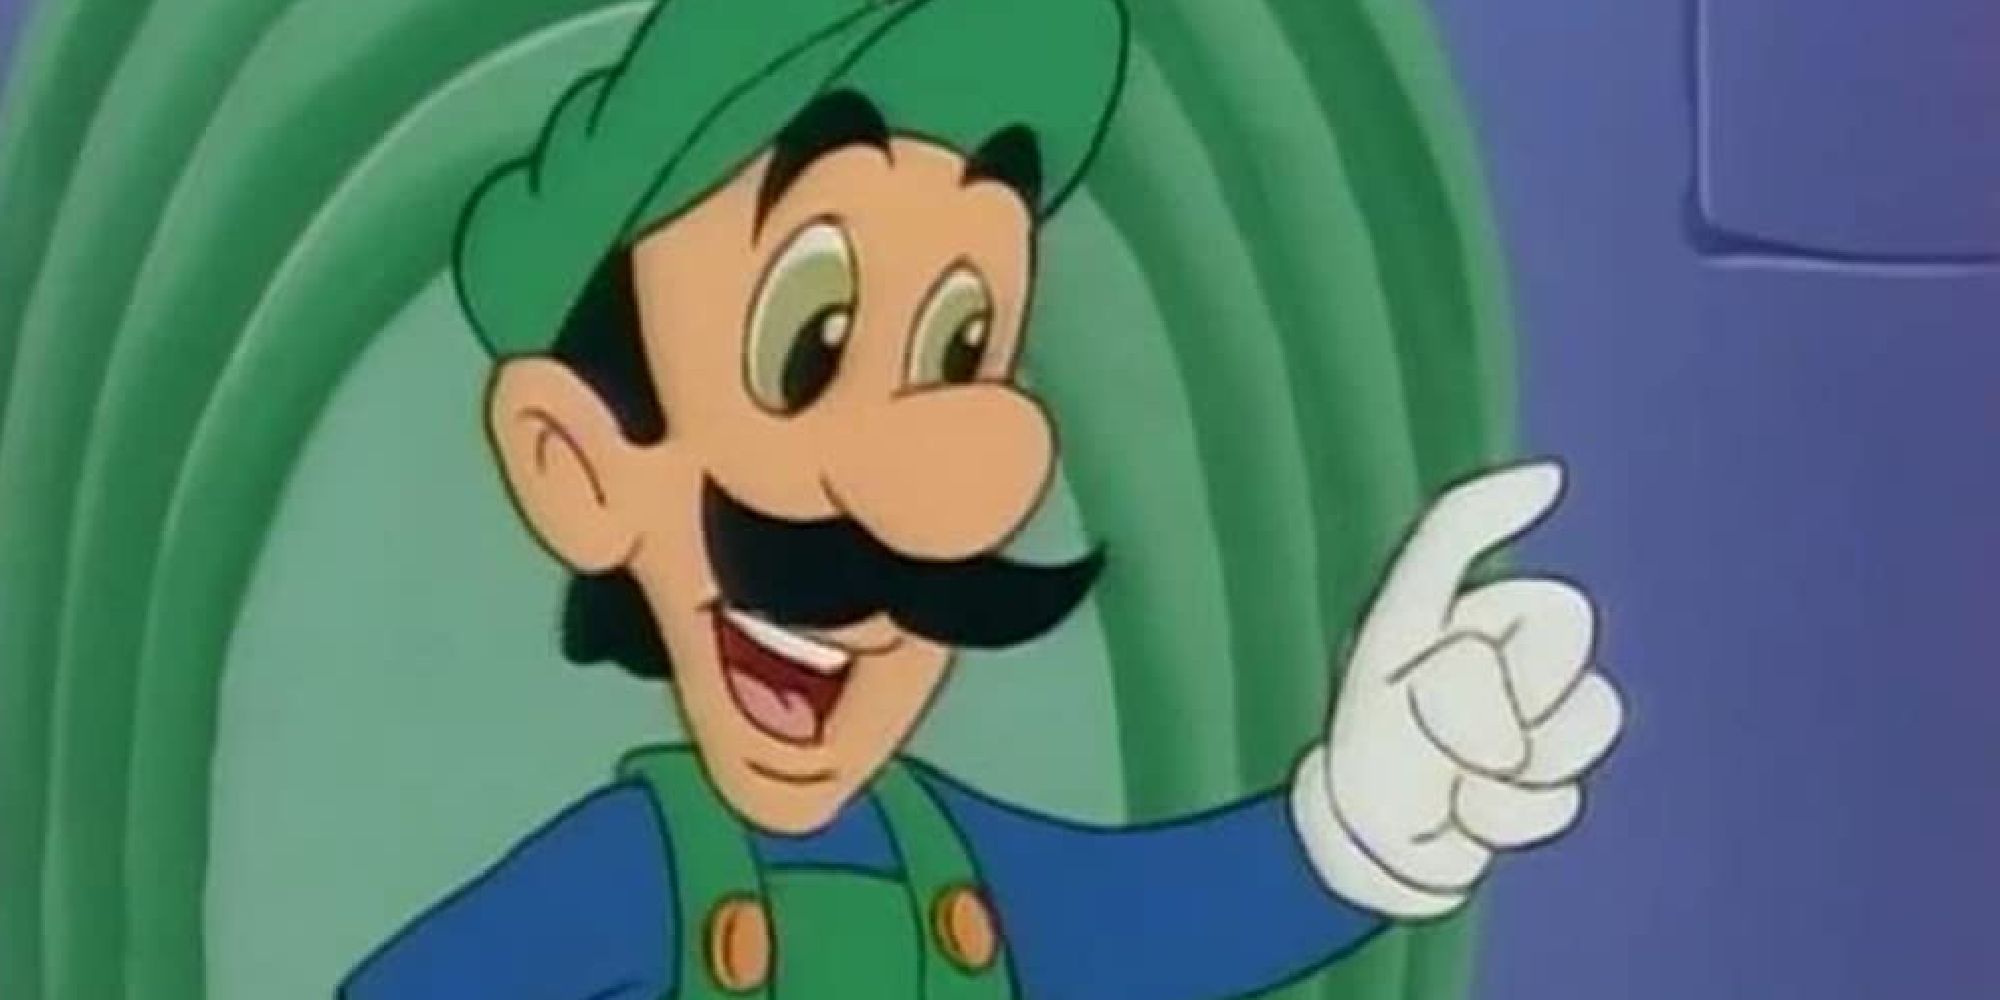 Luigi saying the line "That's Mama Luigi to you, Mario!" in Super Mario World